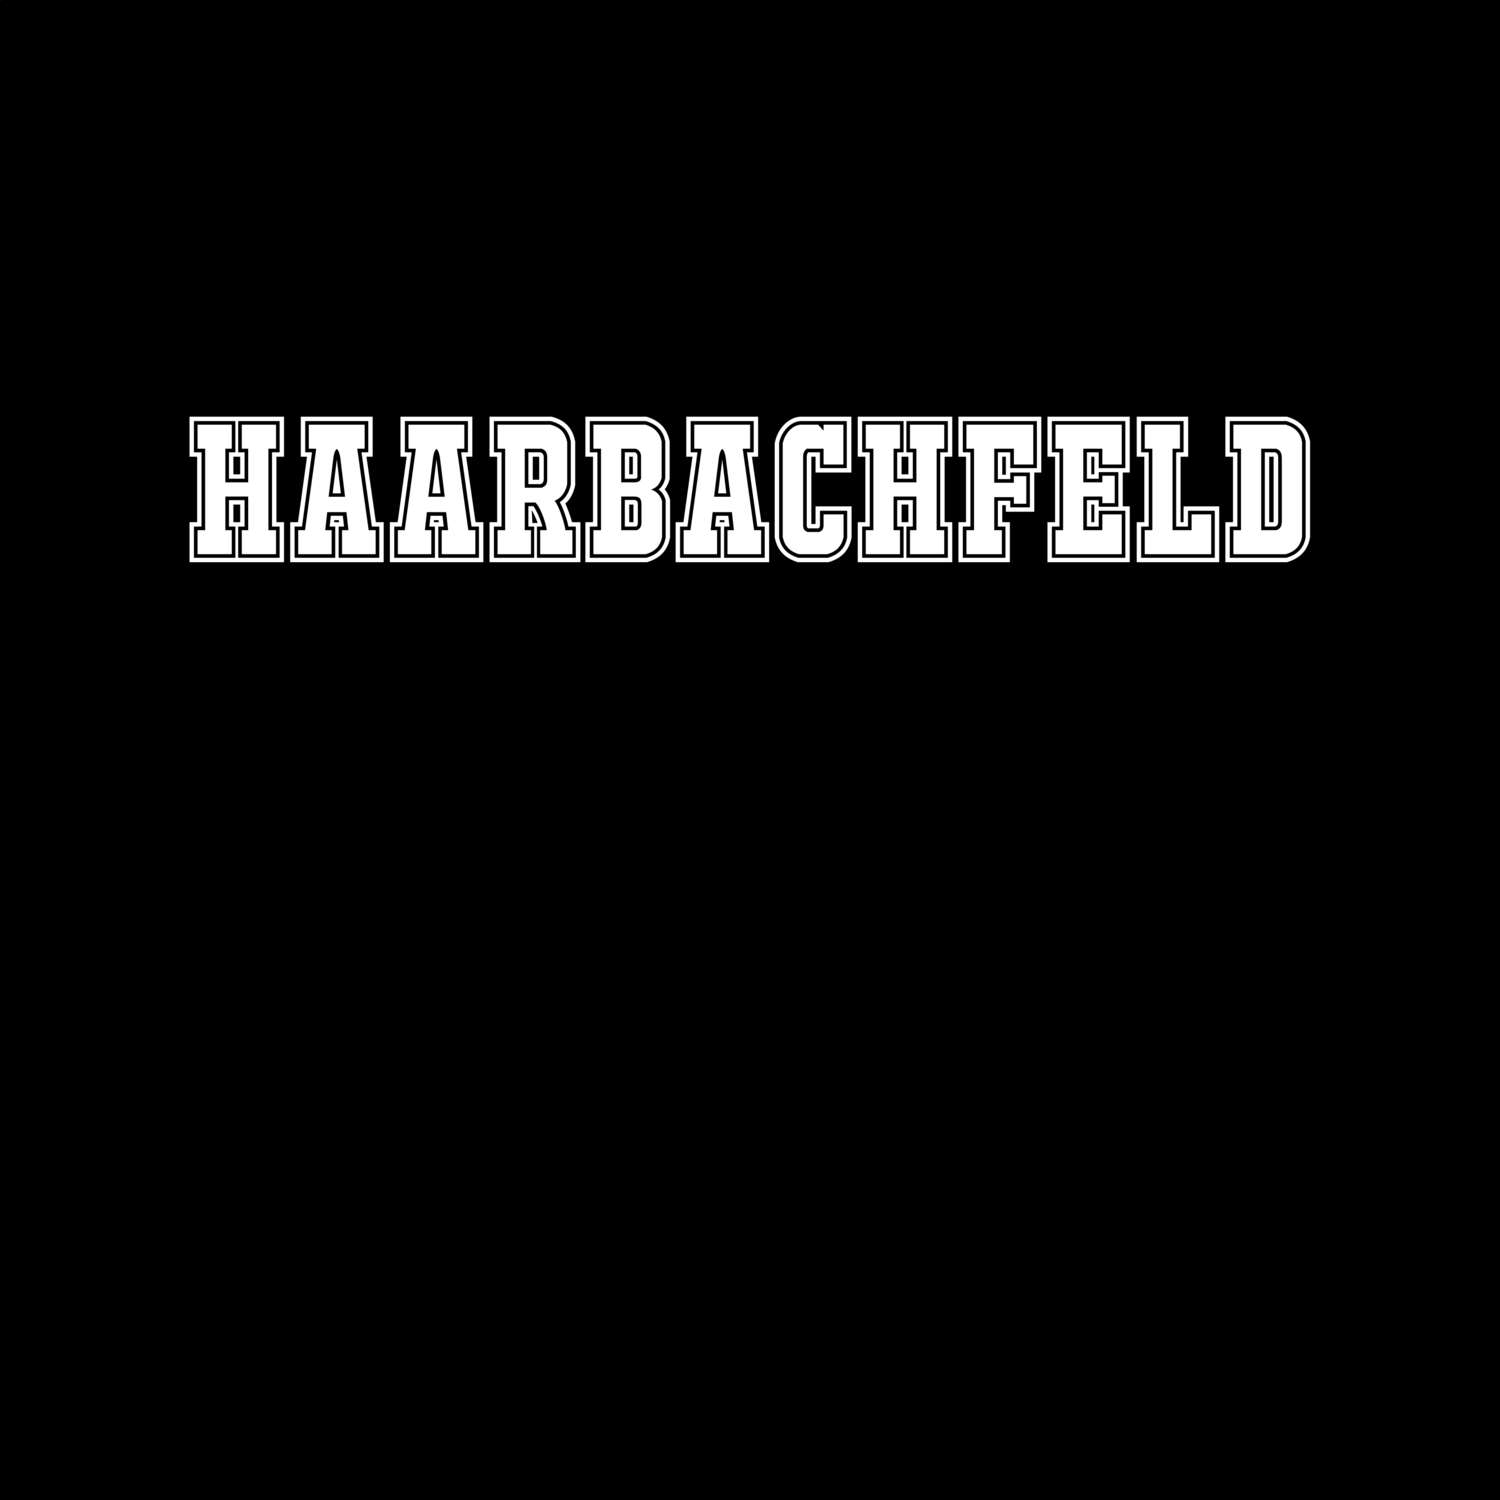 Haarbachfeld T-Shirt »Classic«